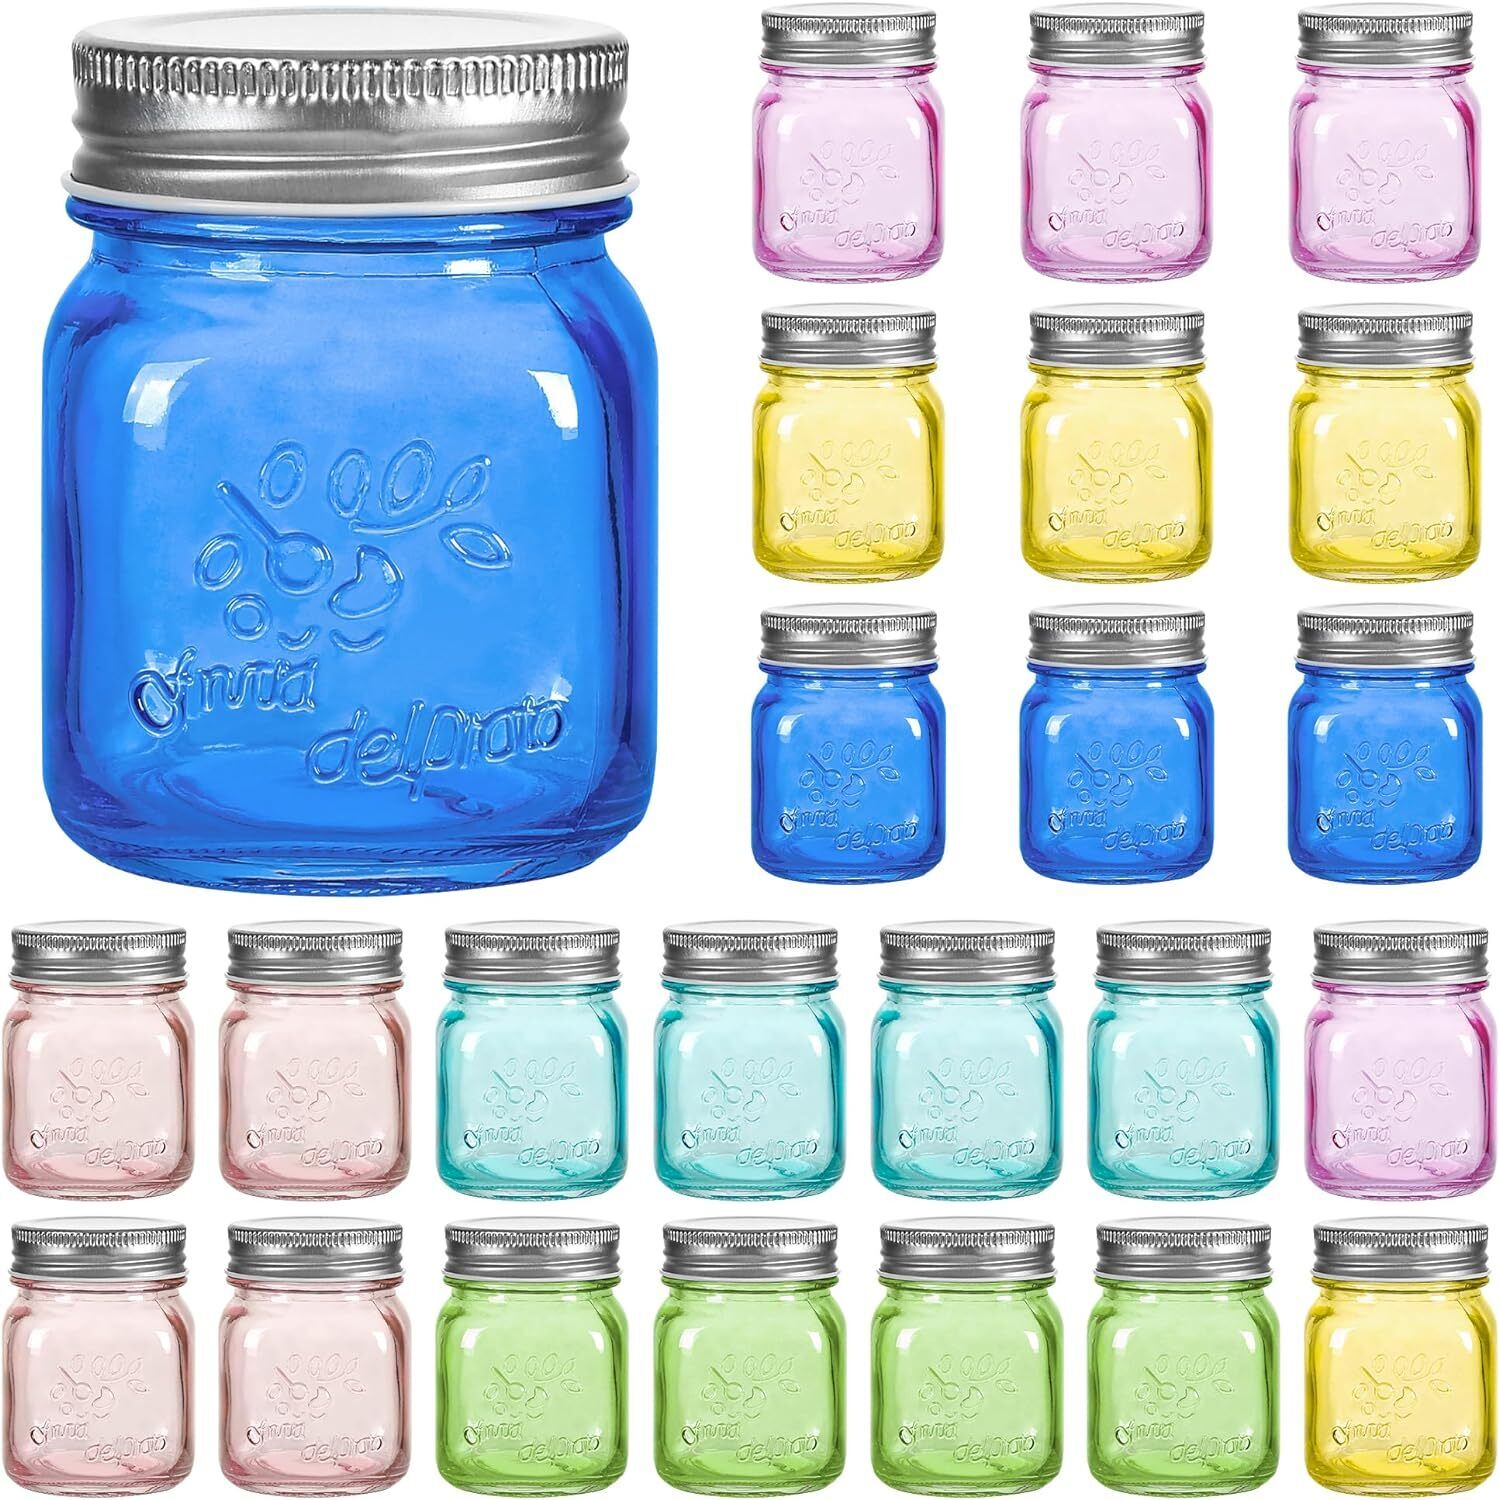 Amzcku 24pc Mini Colored Mason Jars 5 oz with Metal Lids Glass jar for Jam Honey